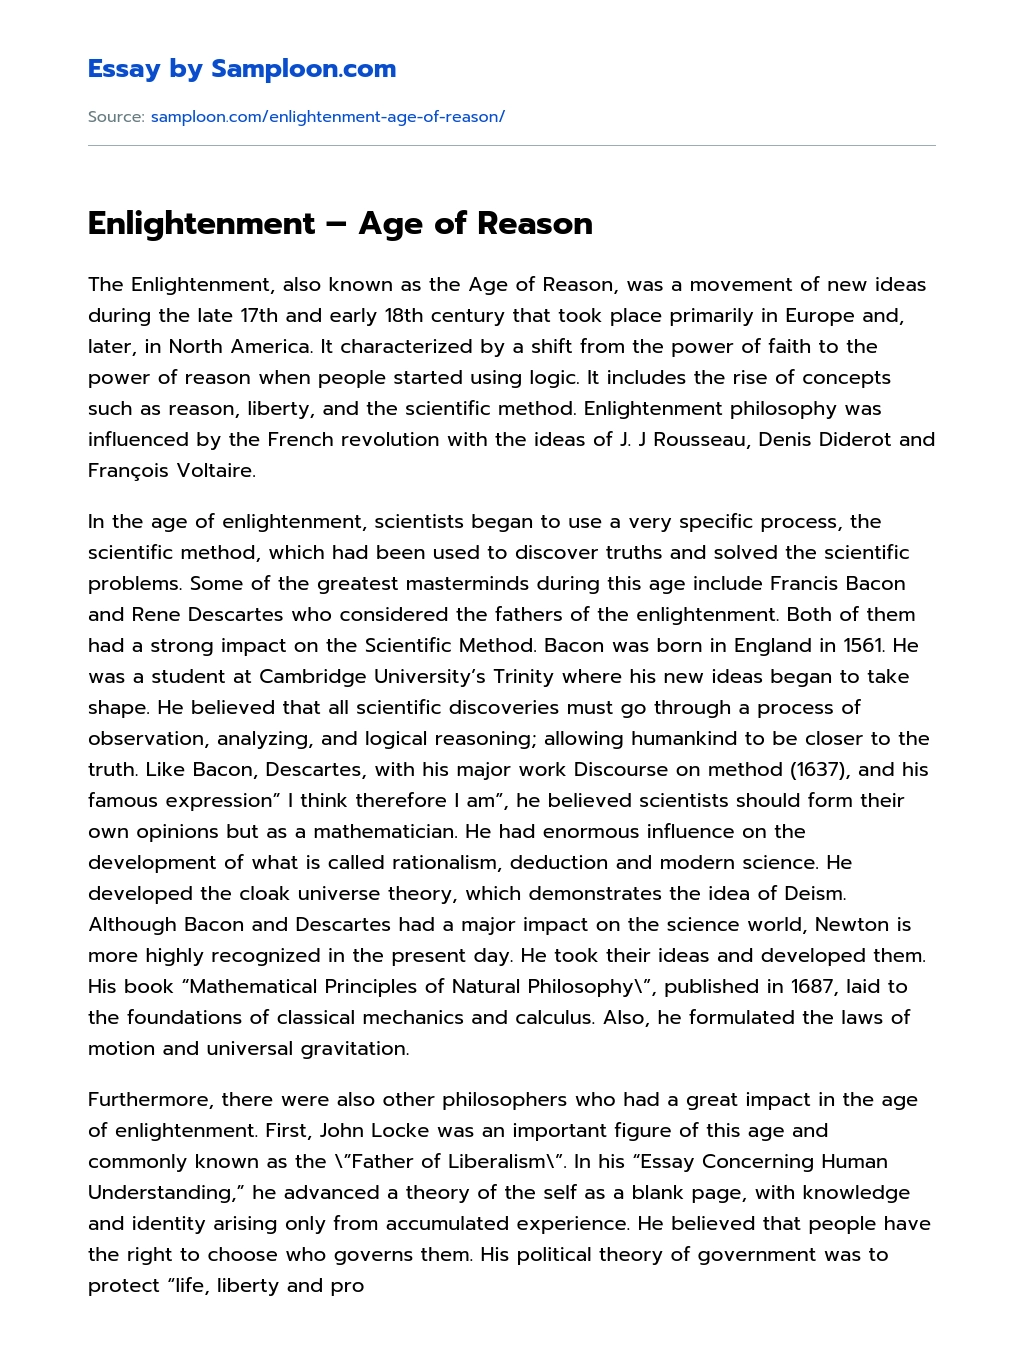 Enlightenment – Age of Reason essay